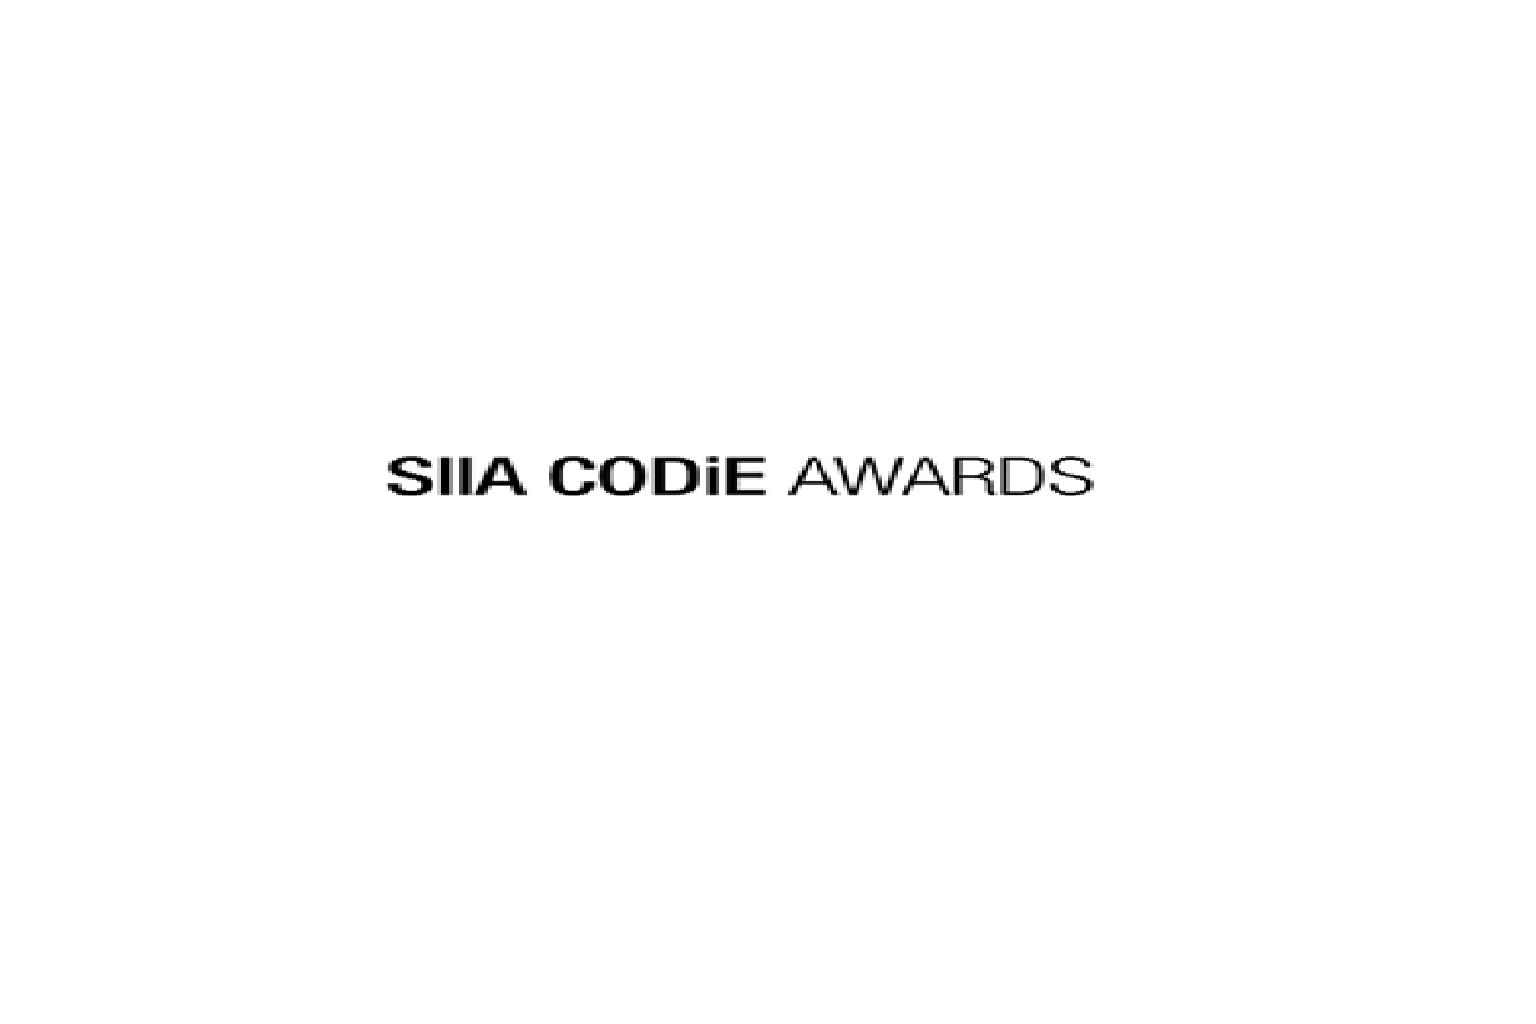 SIIA Codie Awards image logo